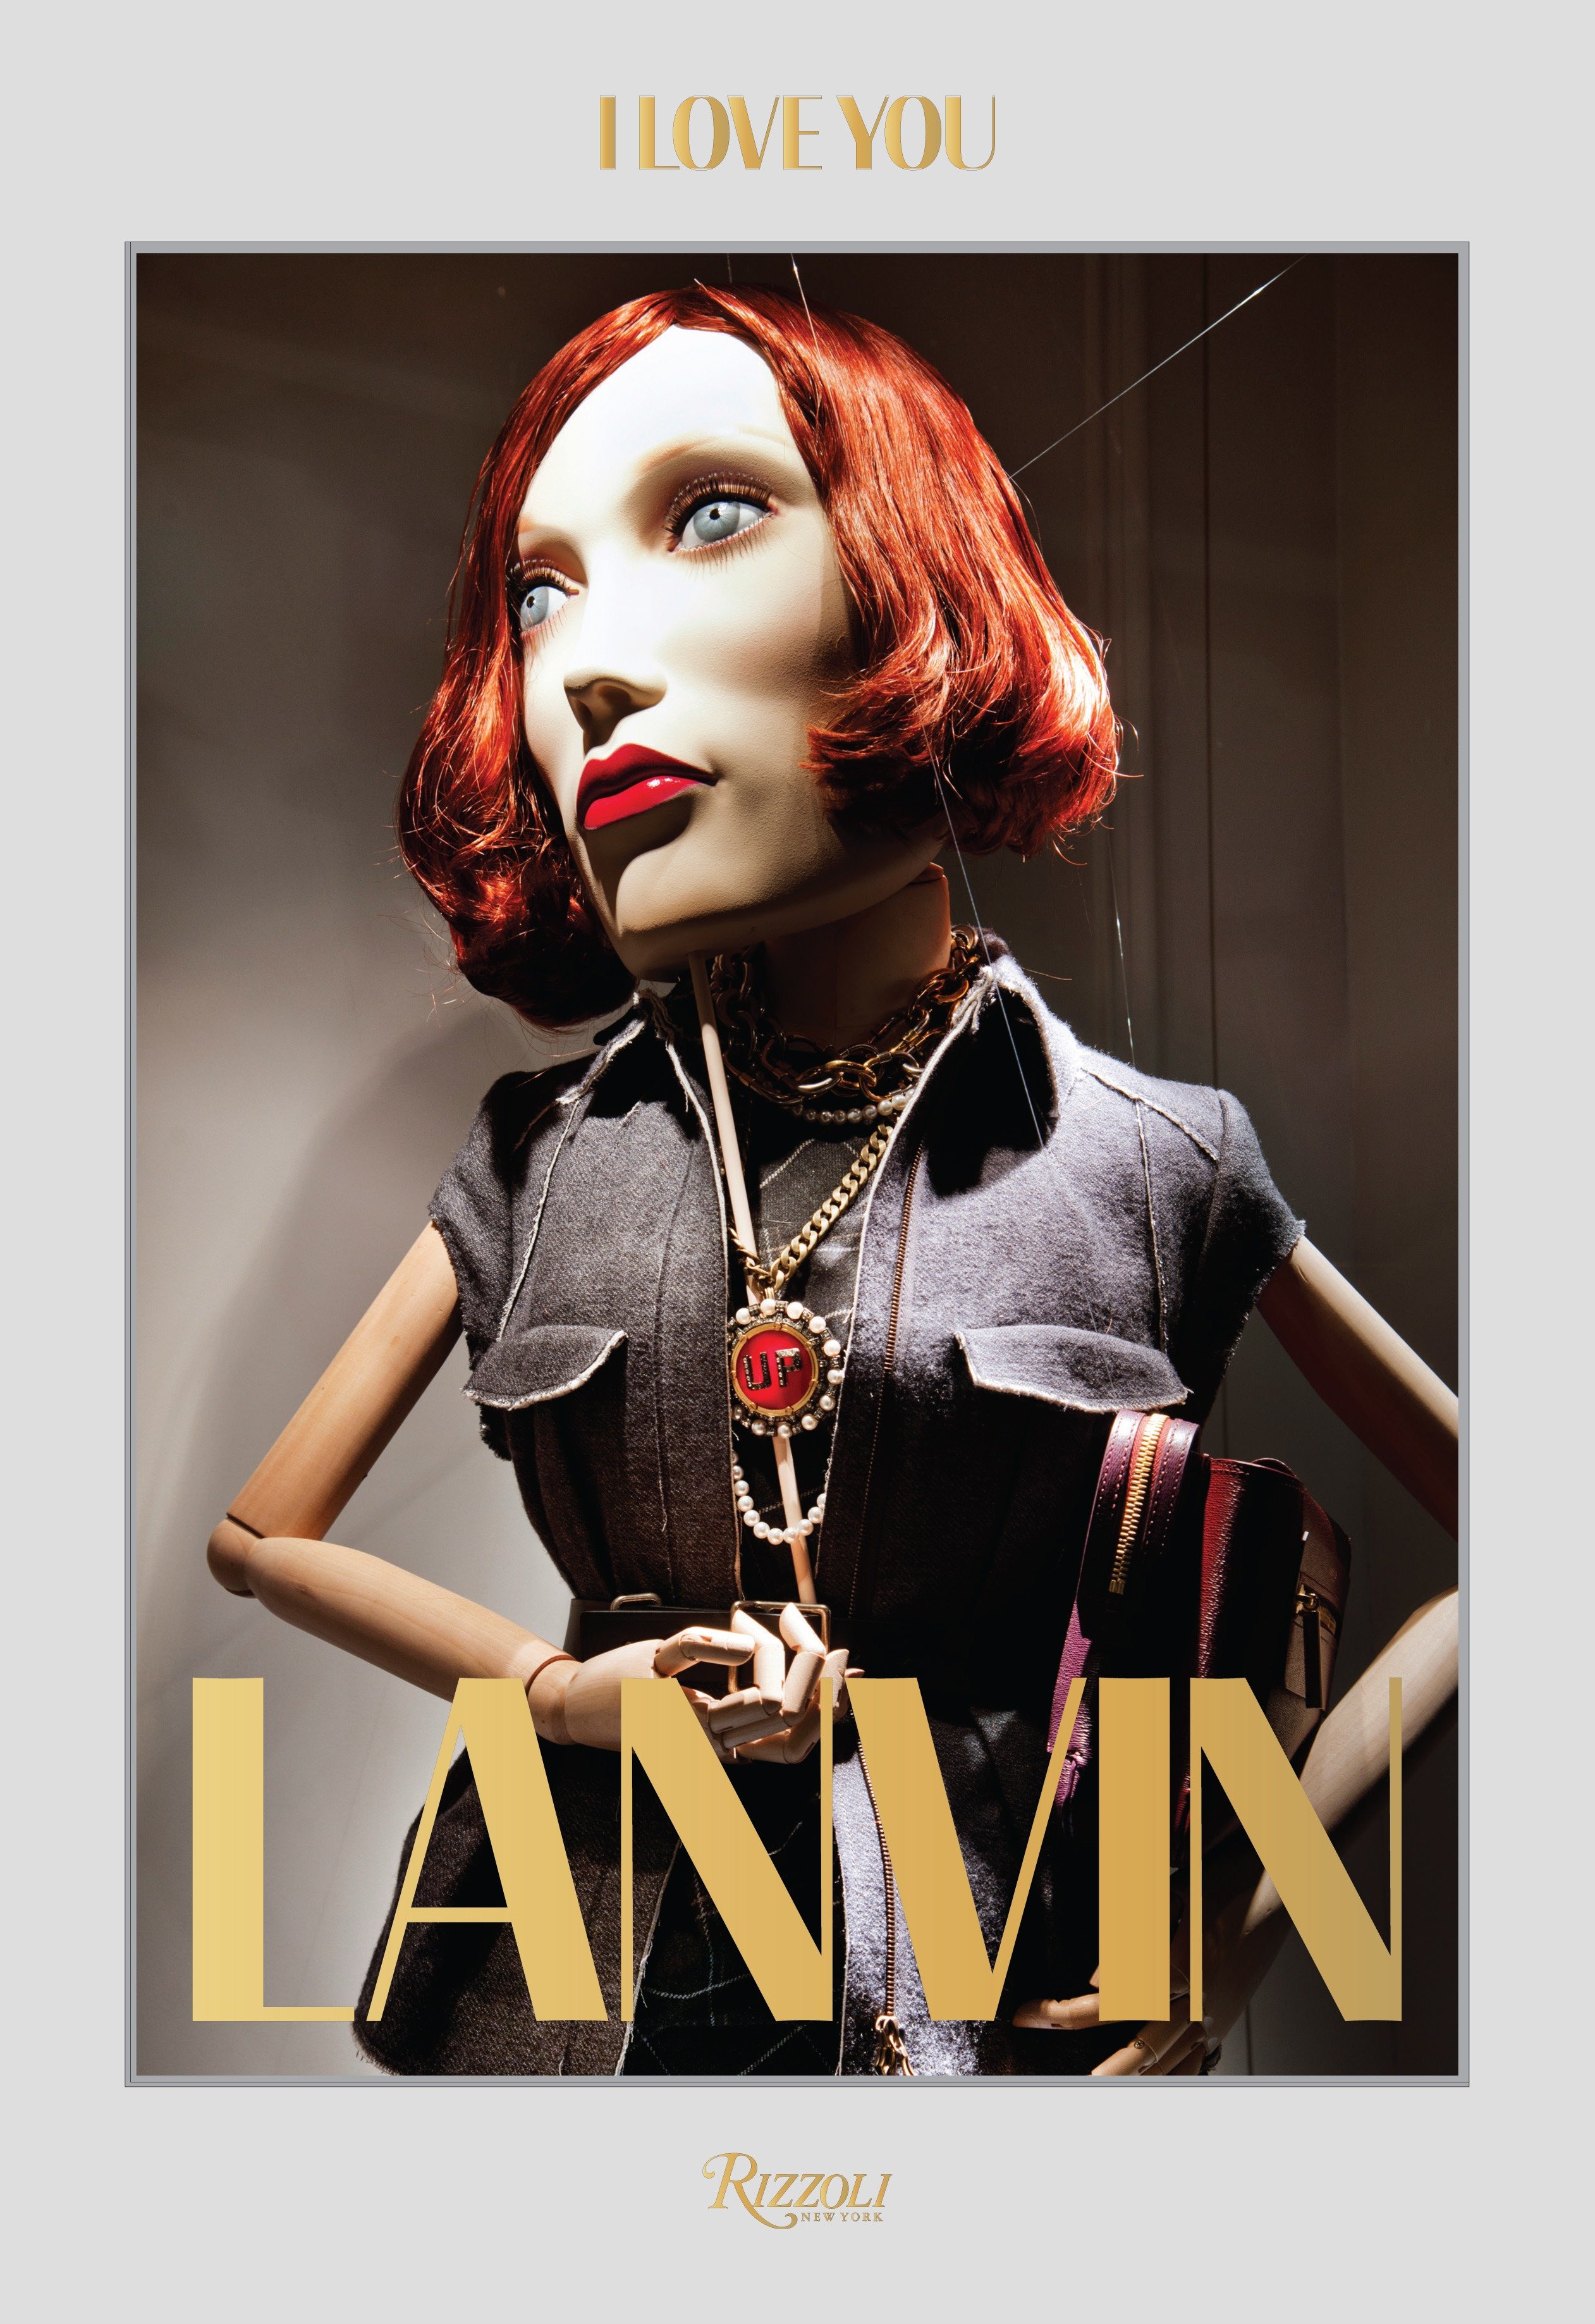 Lanvin: I Love You (Hardcover Book)